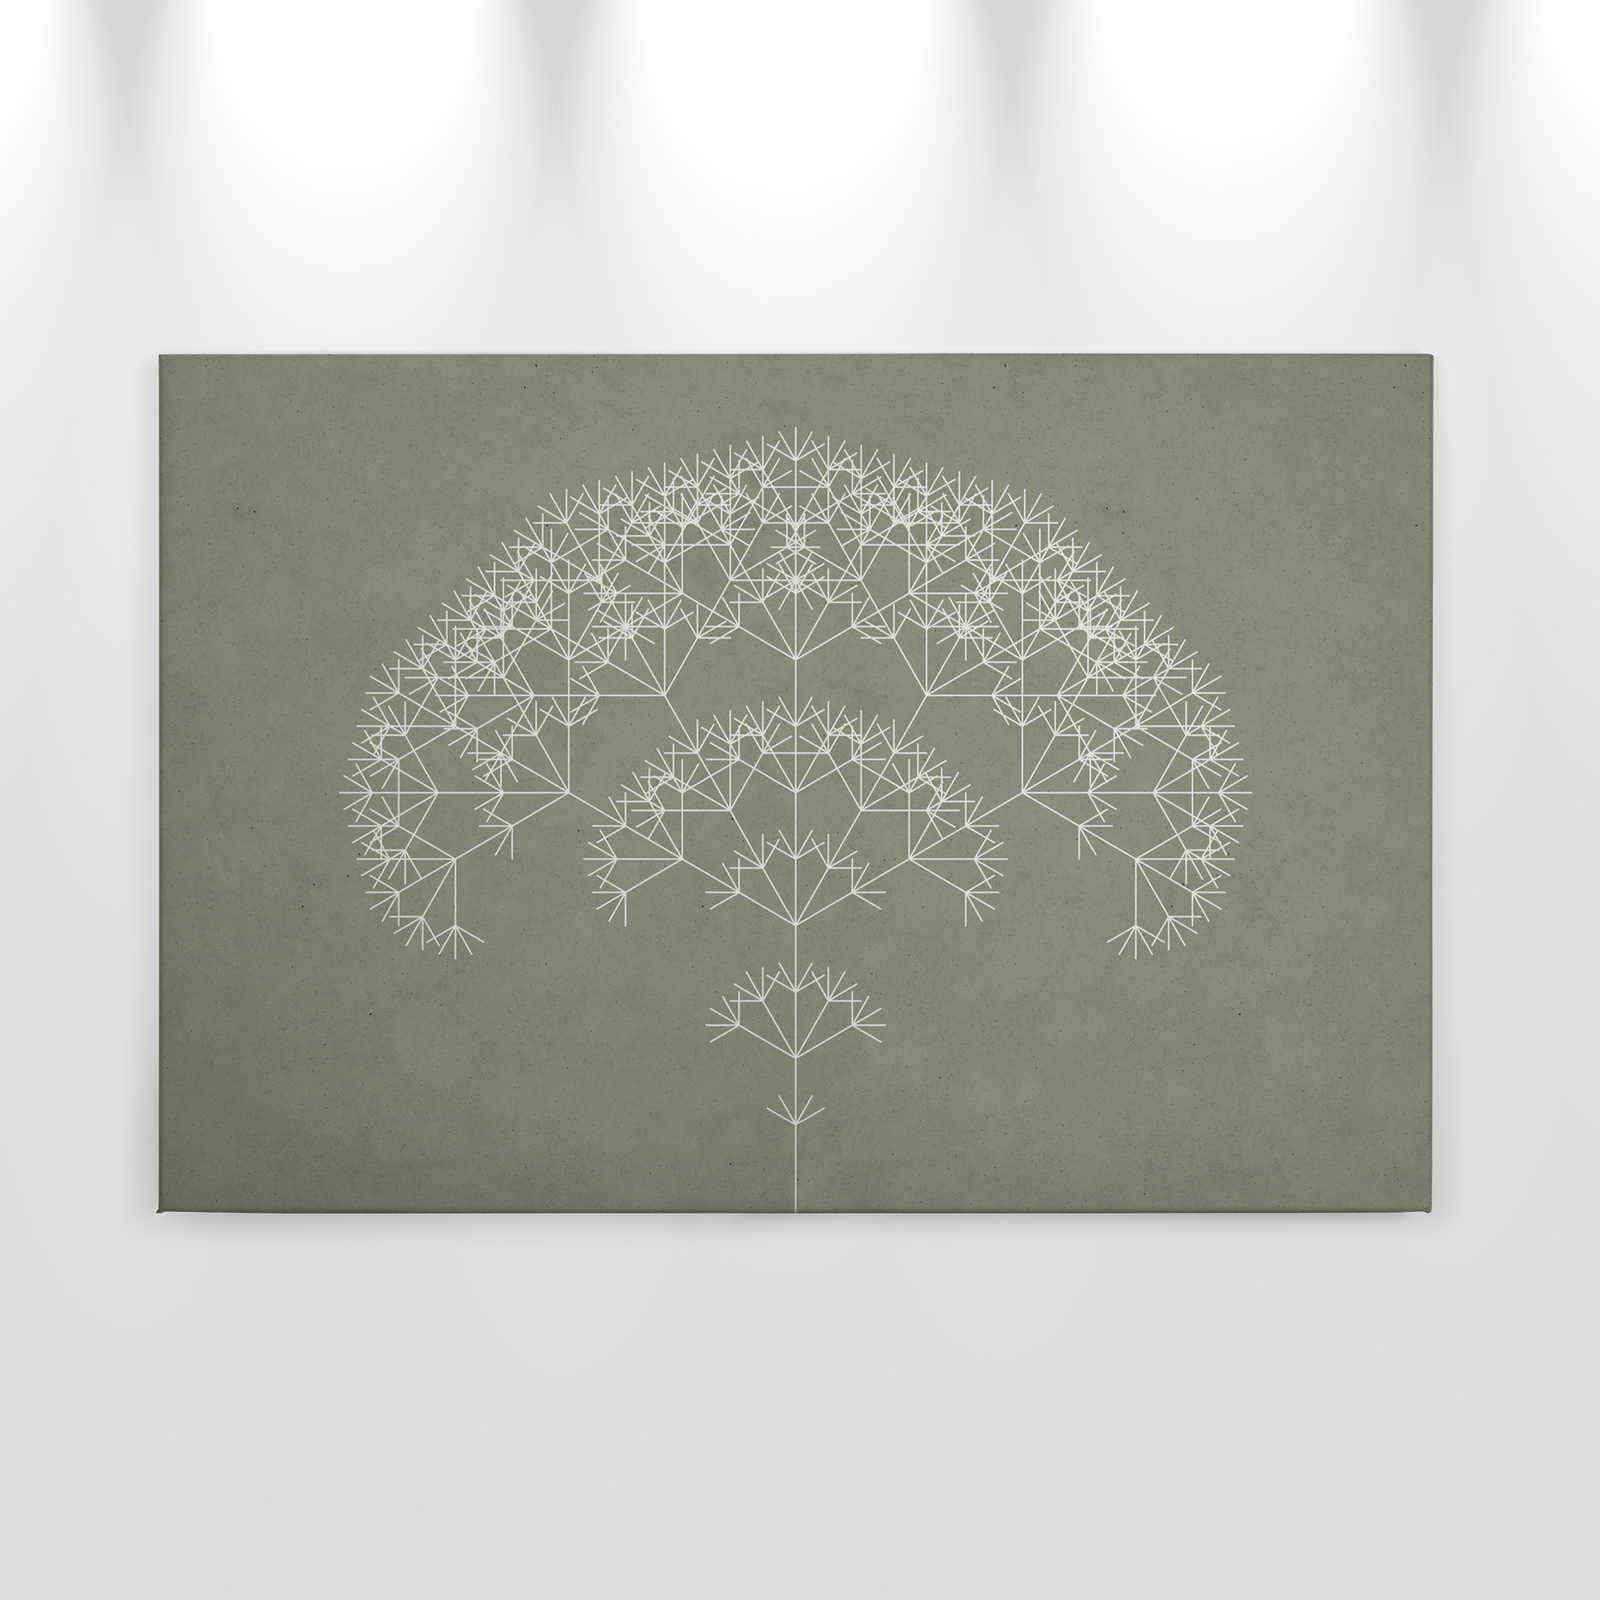             Leinwandbild Pusteblumen Baum | grün, weiß – 0,90 m x 0,60 m
        